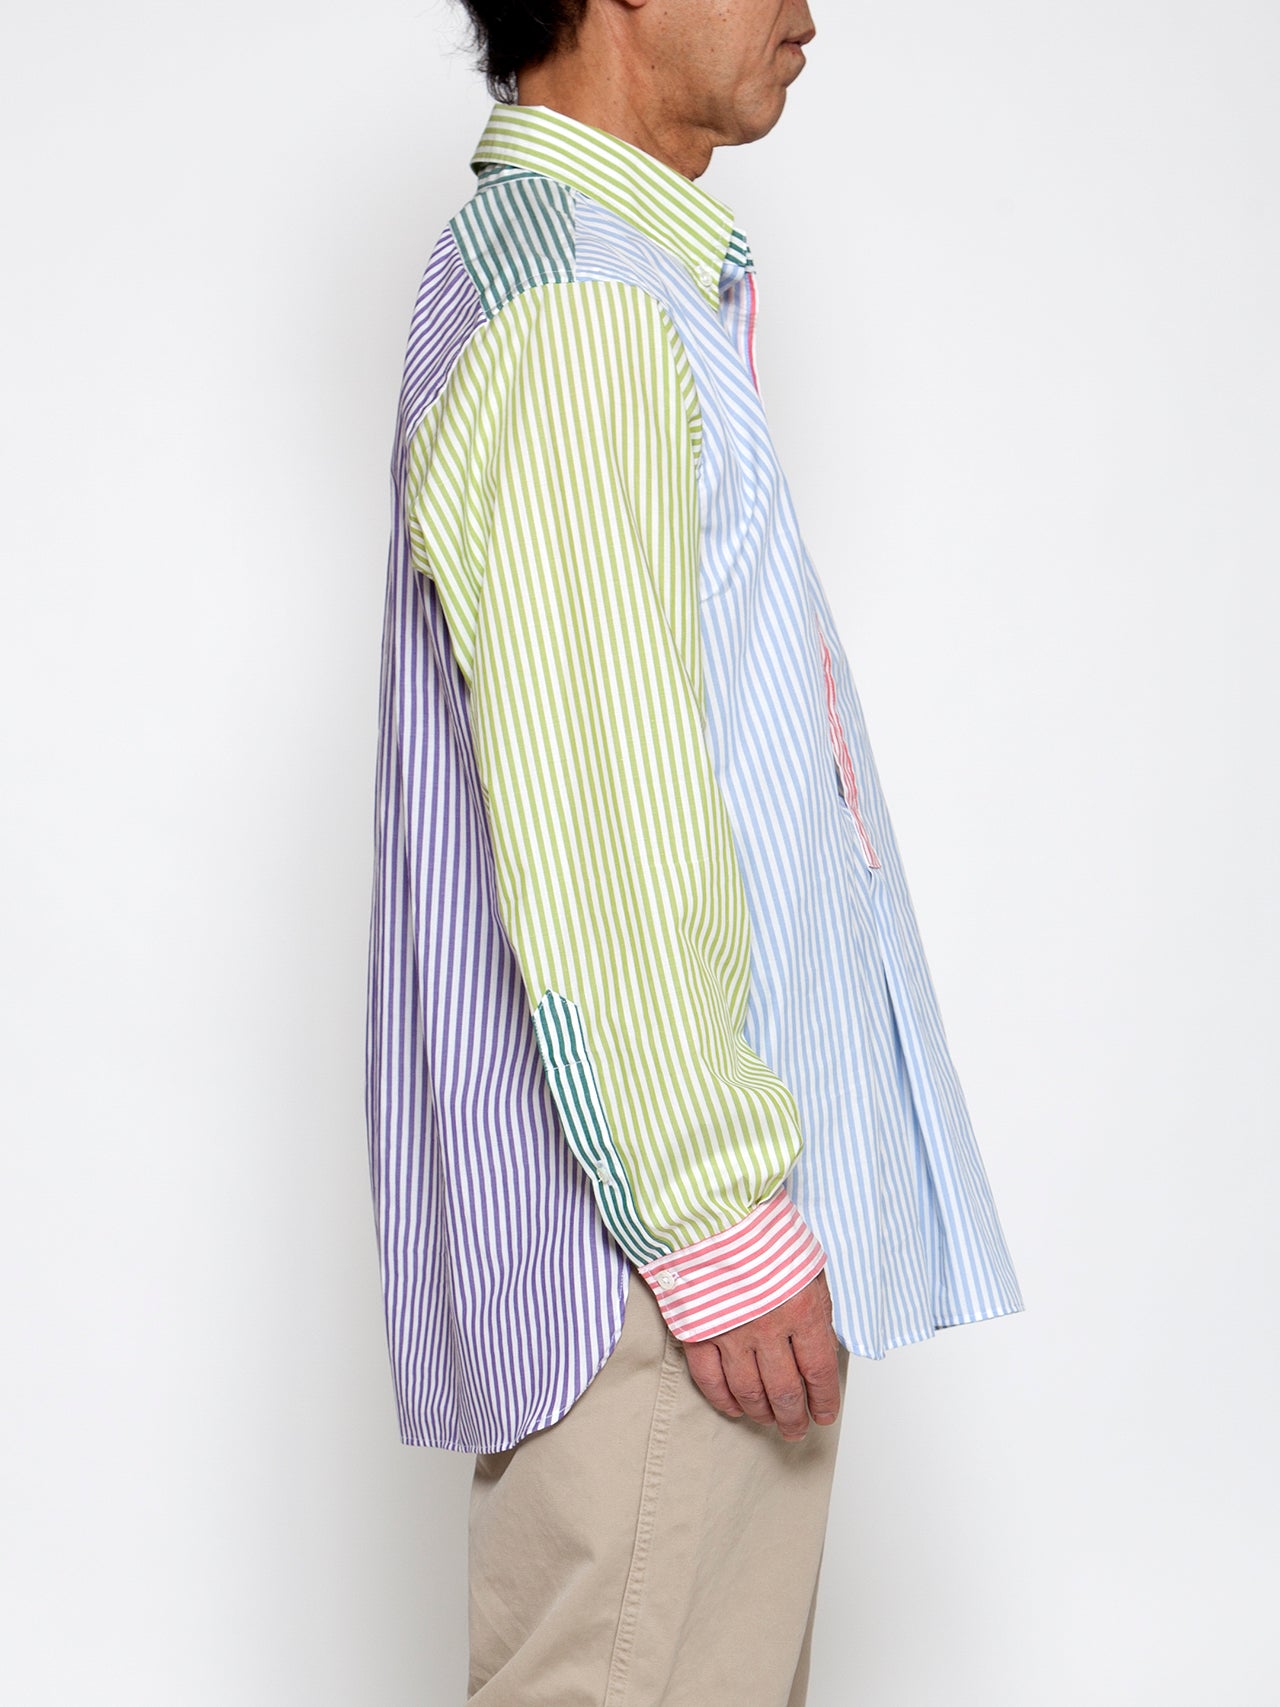 CS005 - CORONA・White Collar Work Shirt / Stripe Broadcloth - Crazy Pattern